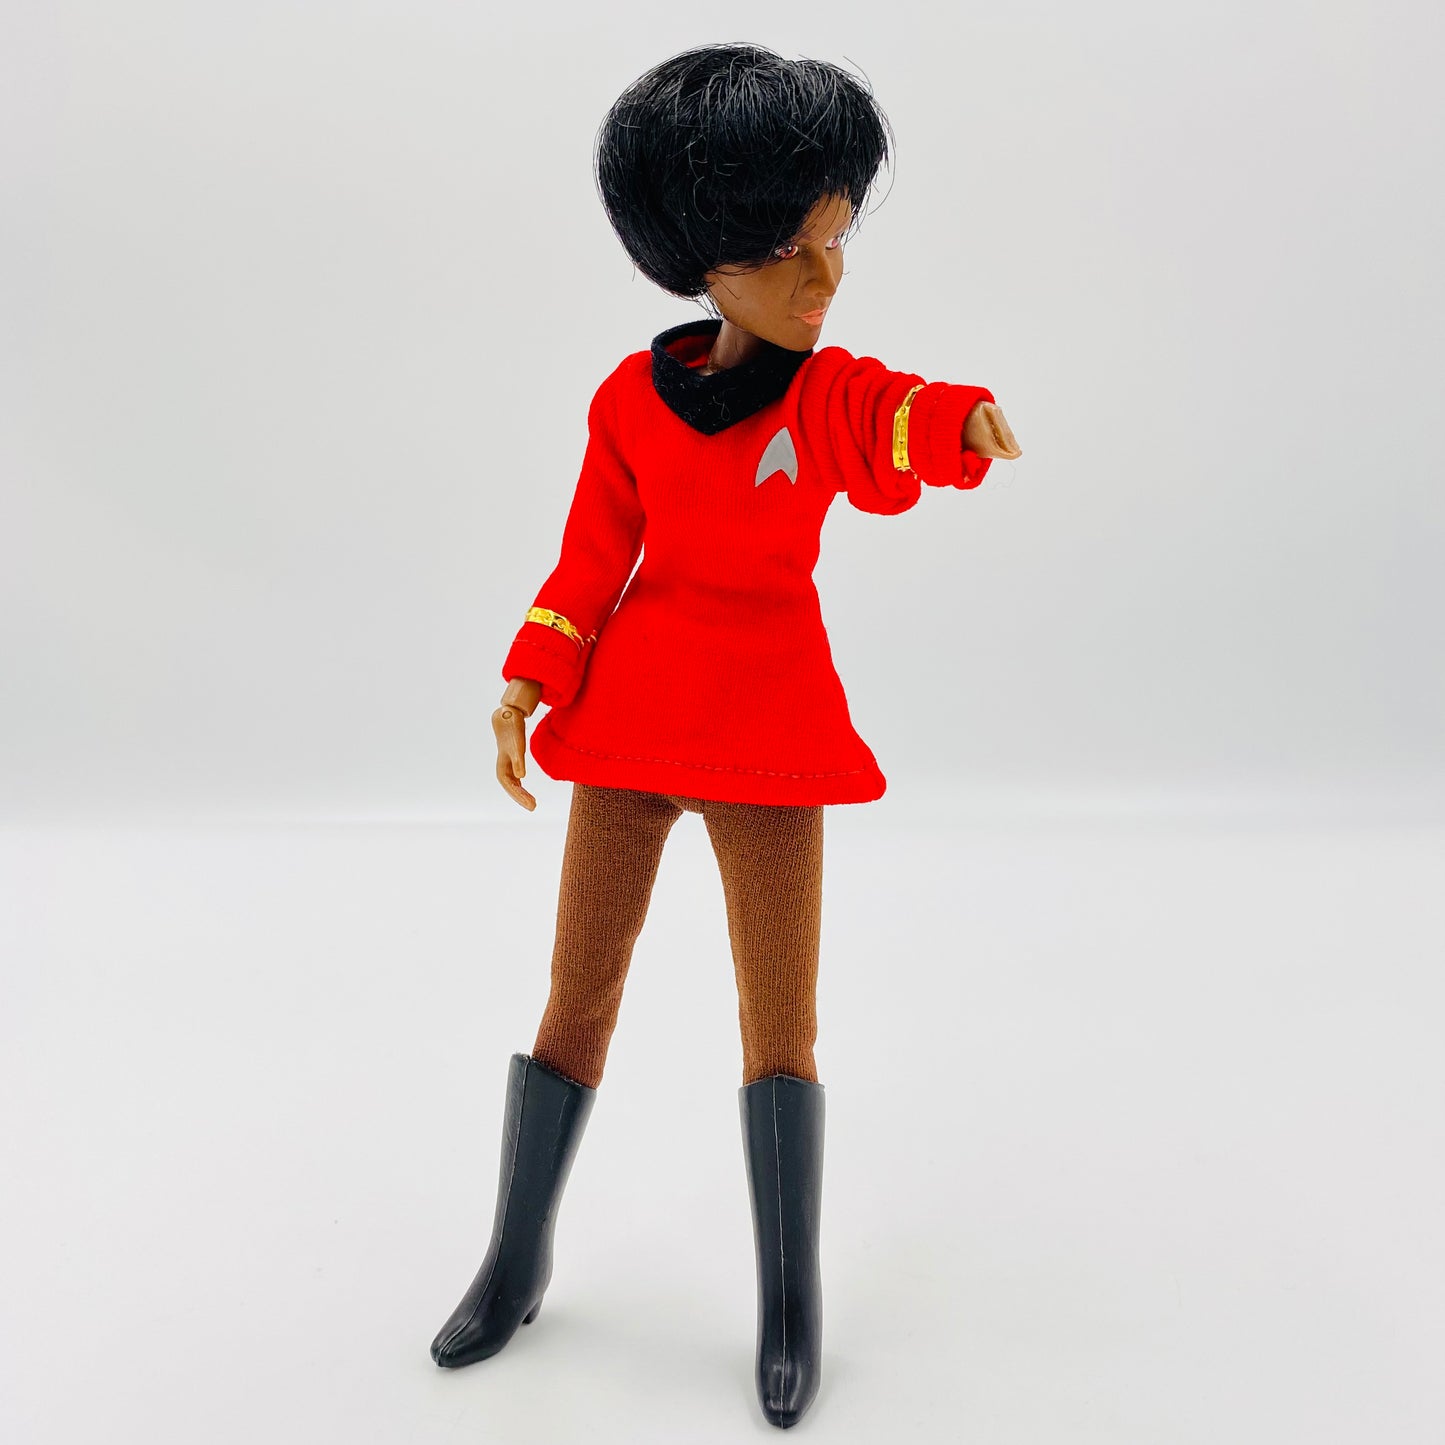 Star Trek Lt. Uhura loose 8” action figure (1974) Mego